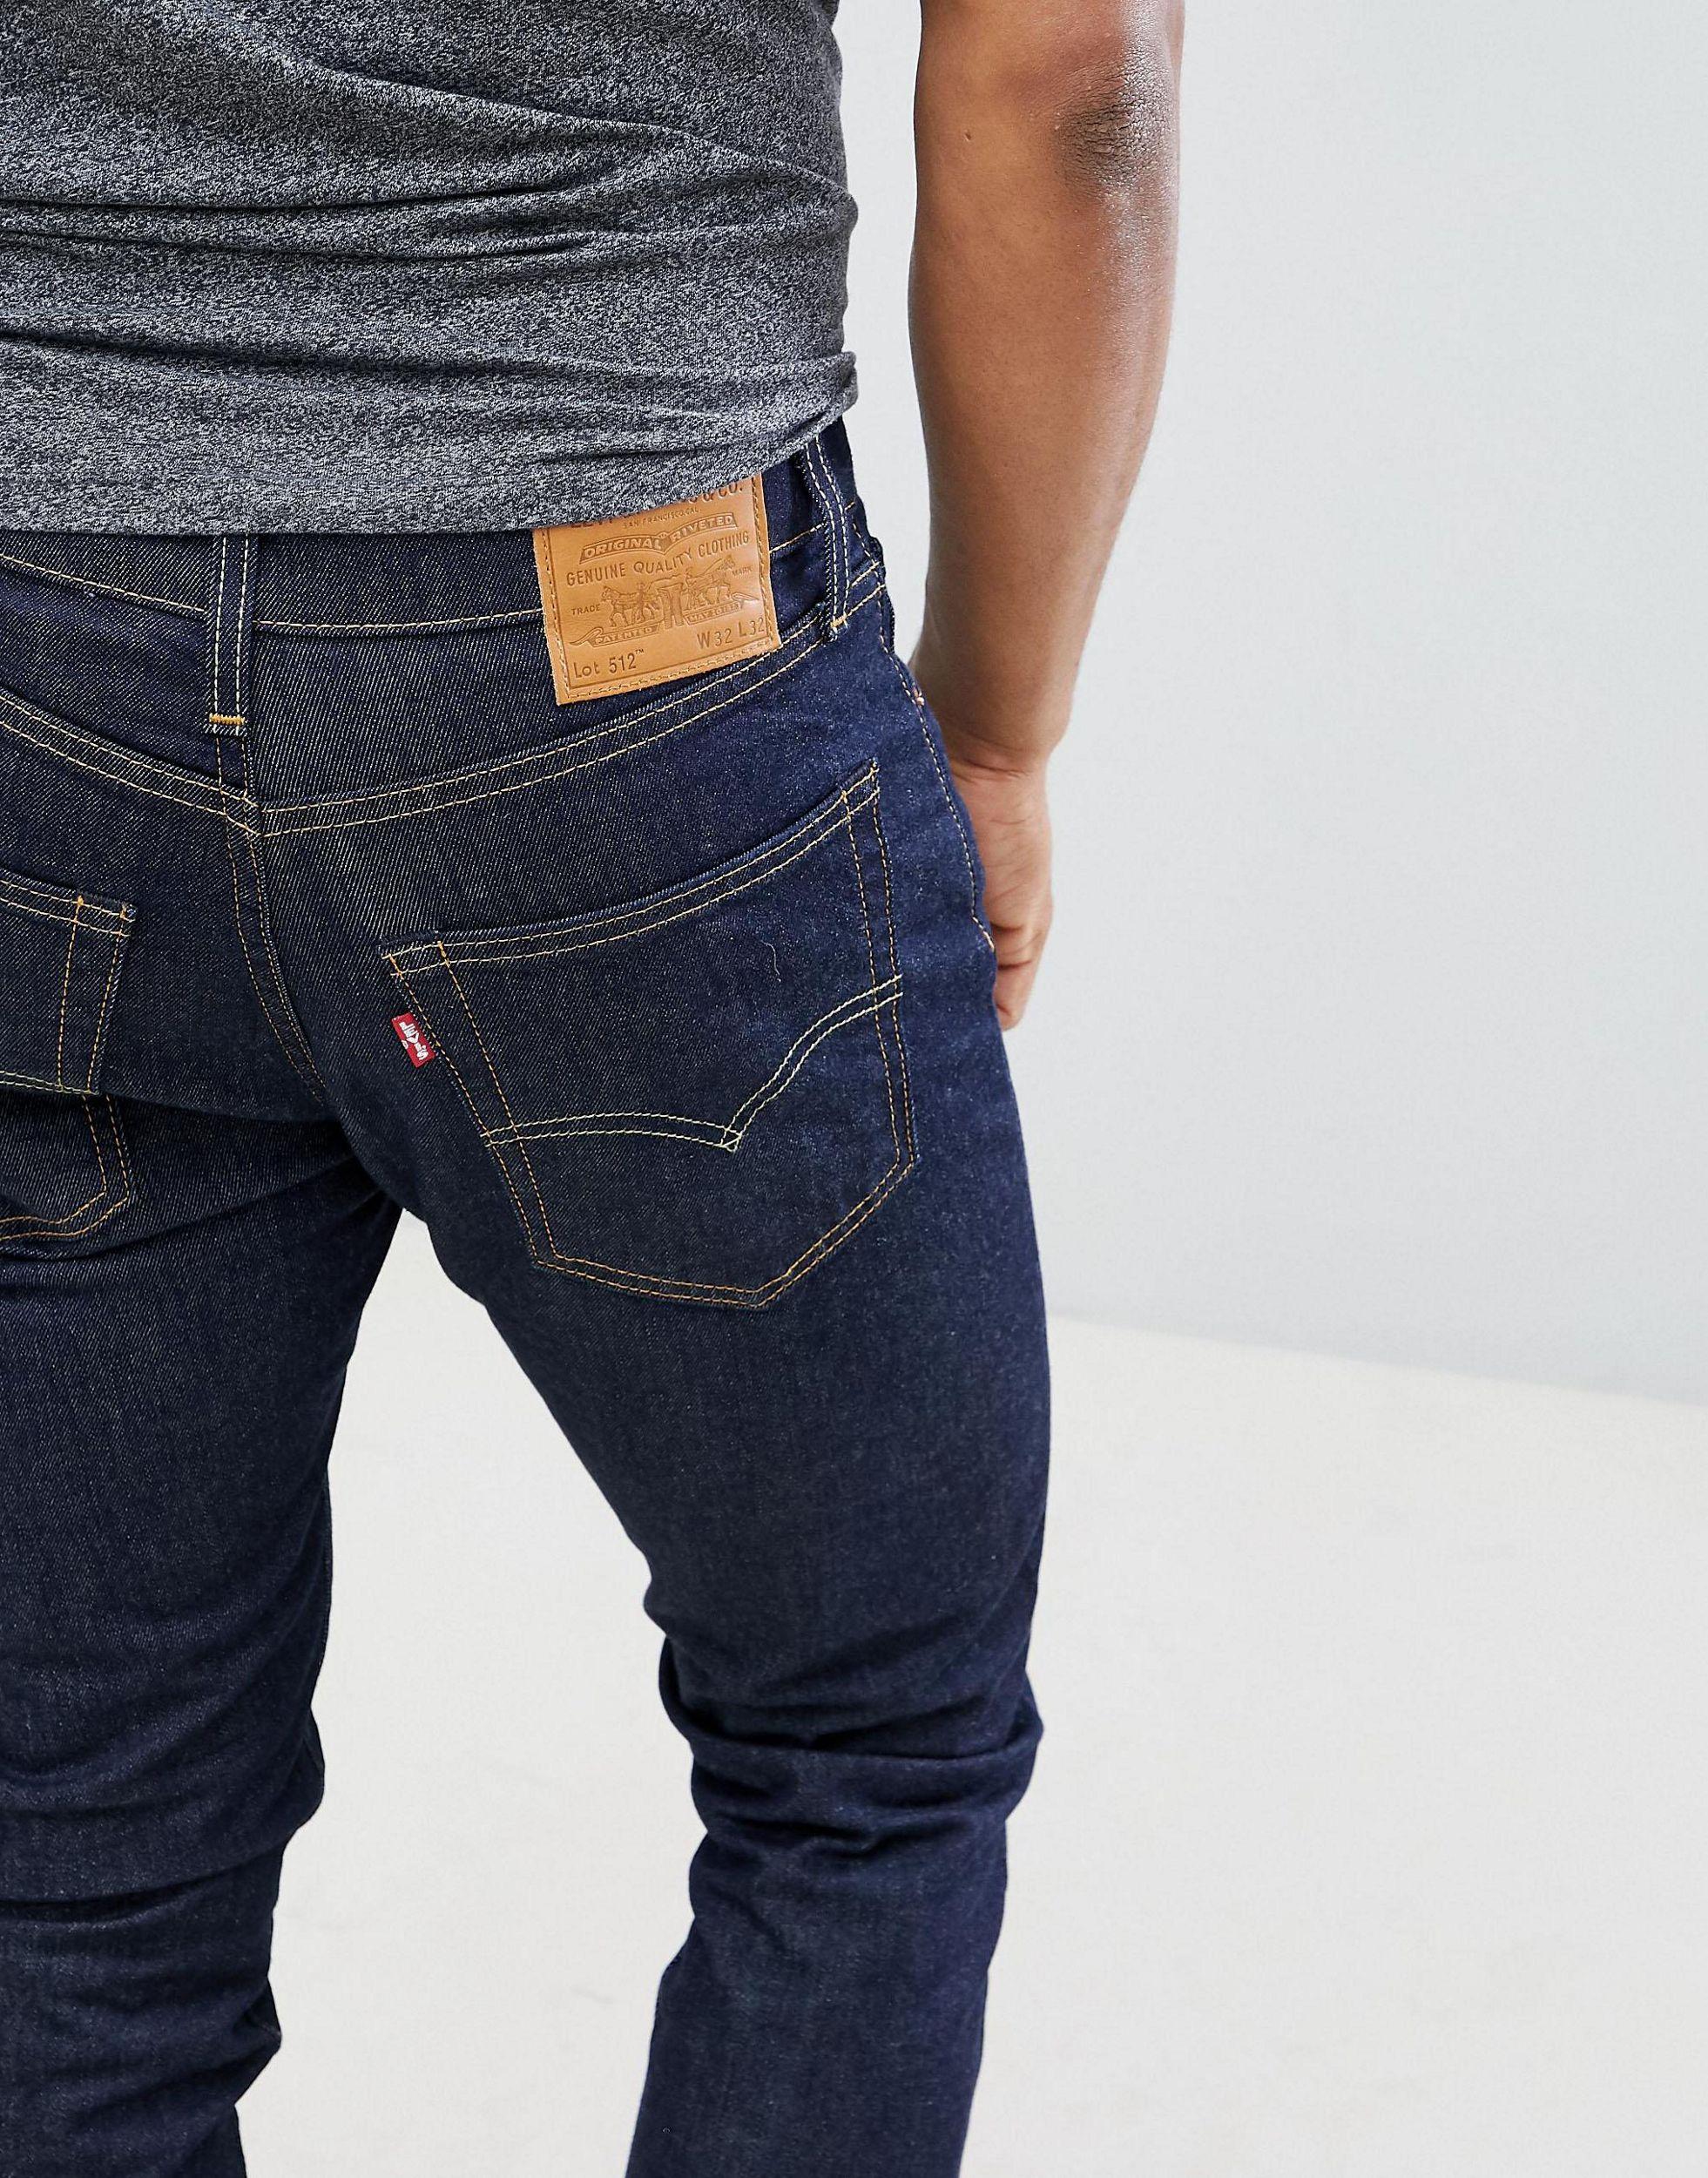 Levi's Denim Levi's 512 Slim Tapered Jeans Rock Cod in Blue for Men - Lyst